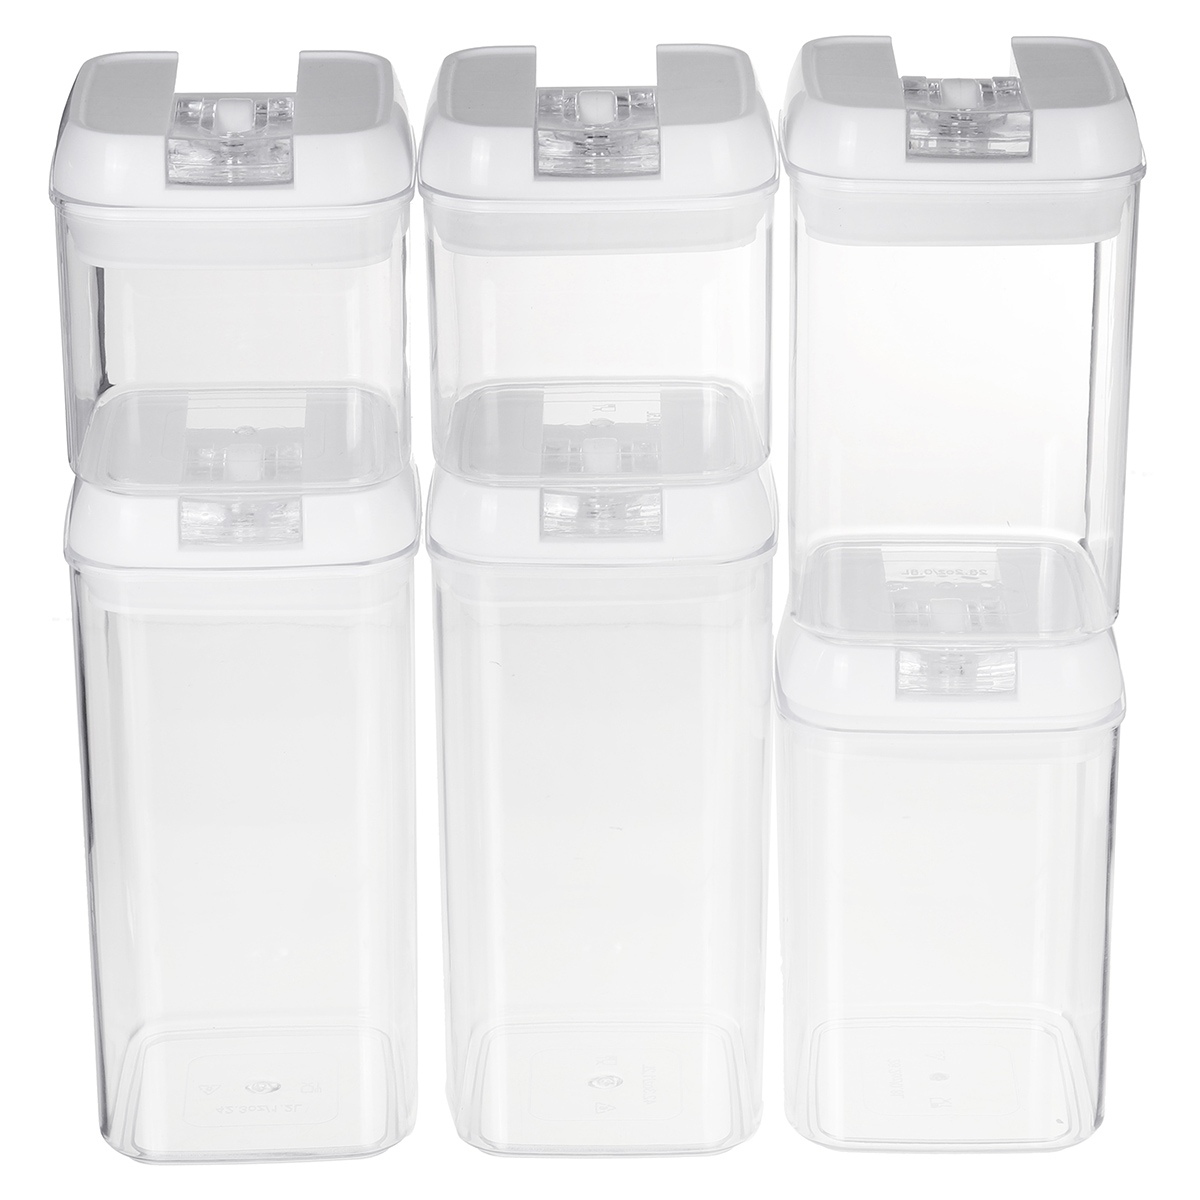 6pcs-Airtight-Refrigerator-Food-Container-Storage-with-Lock-Lids-Plastic-Transparent-Multigrain-Cont-1752734-22